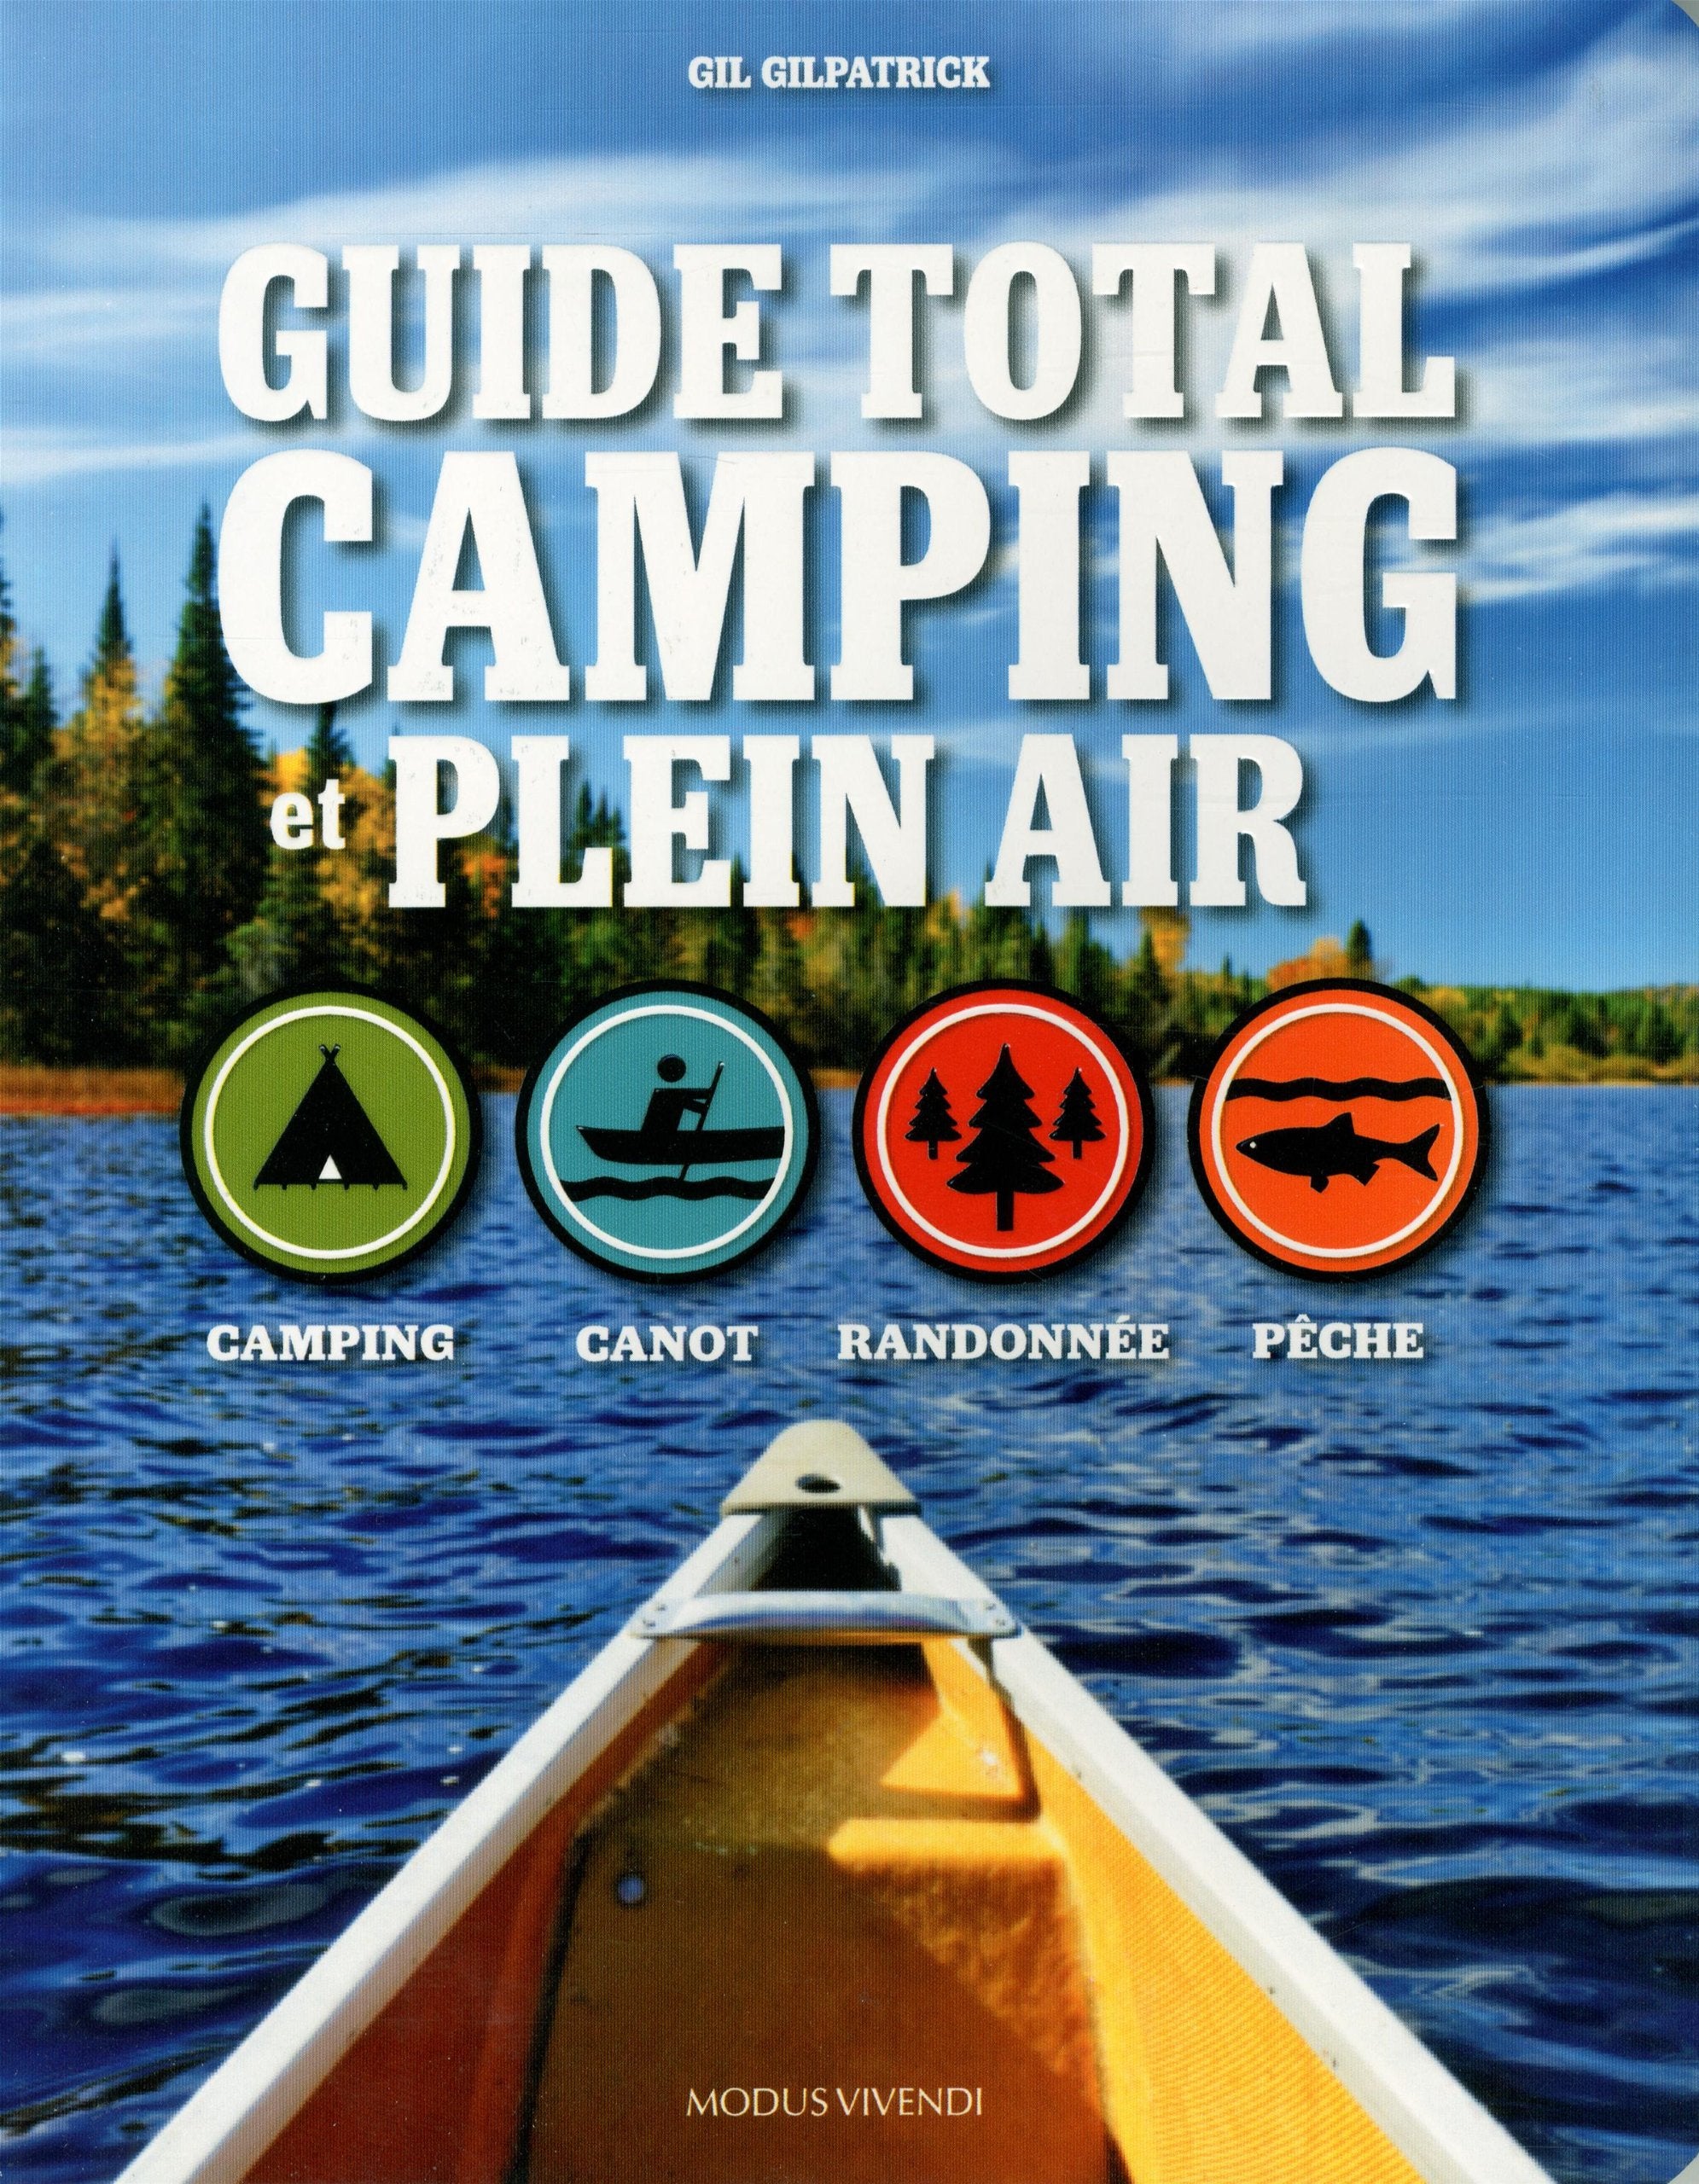 Guide total camping et plein air: Camping, canot, randonnée, pêche - Gil Gilpatrick